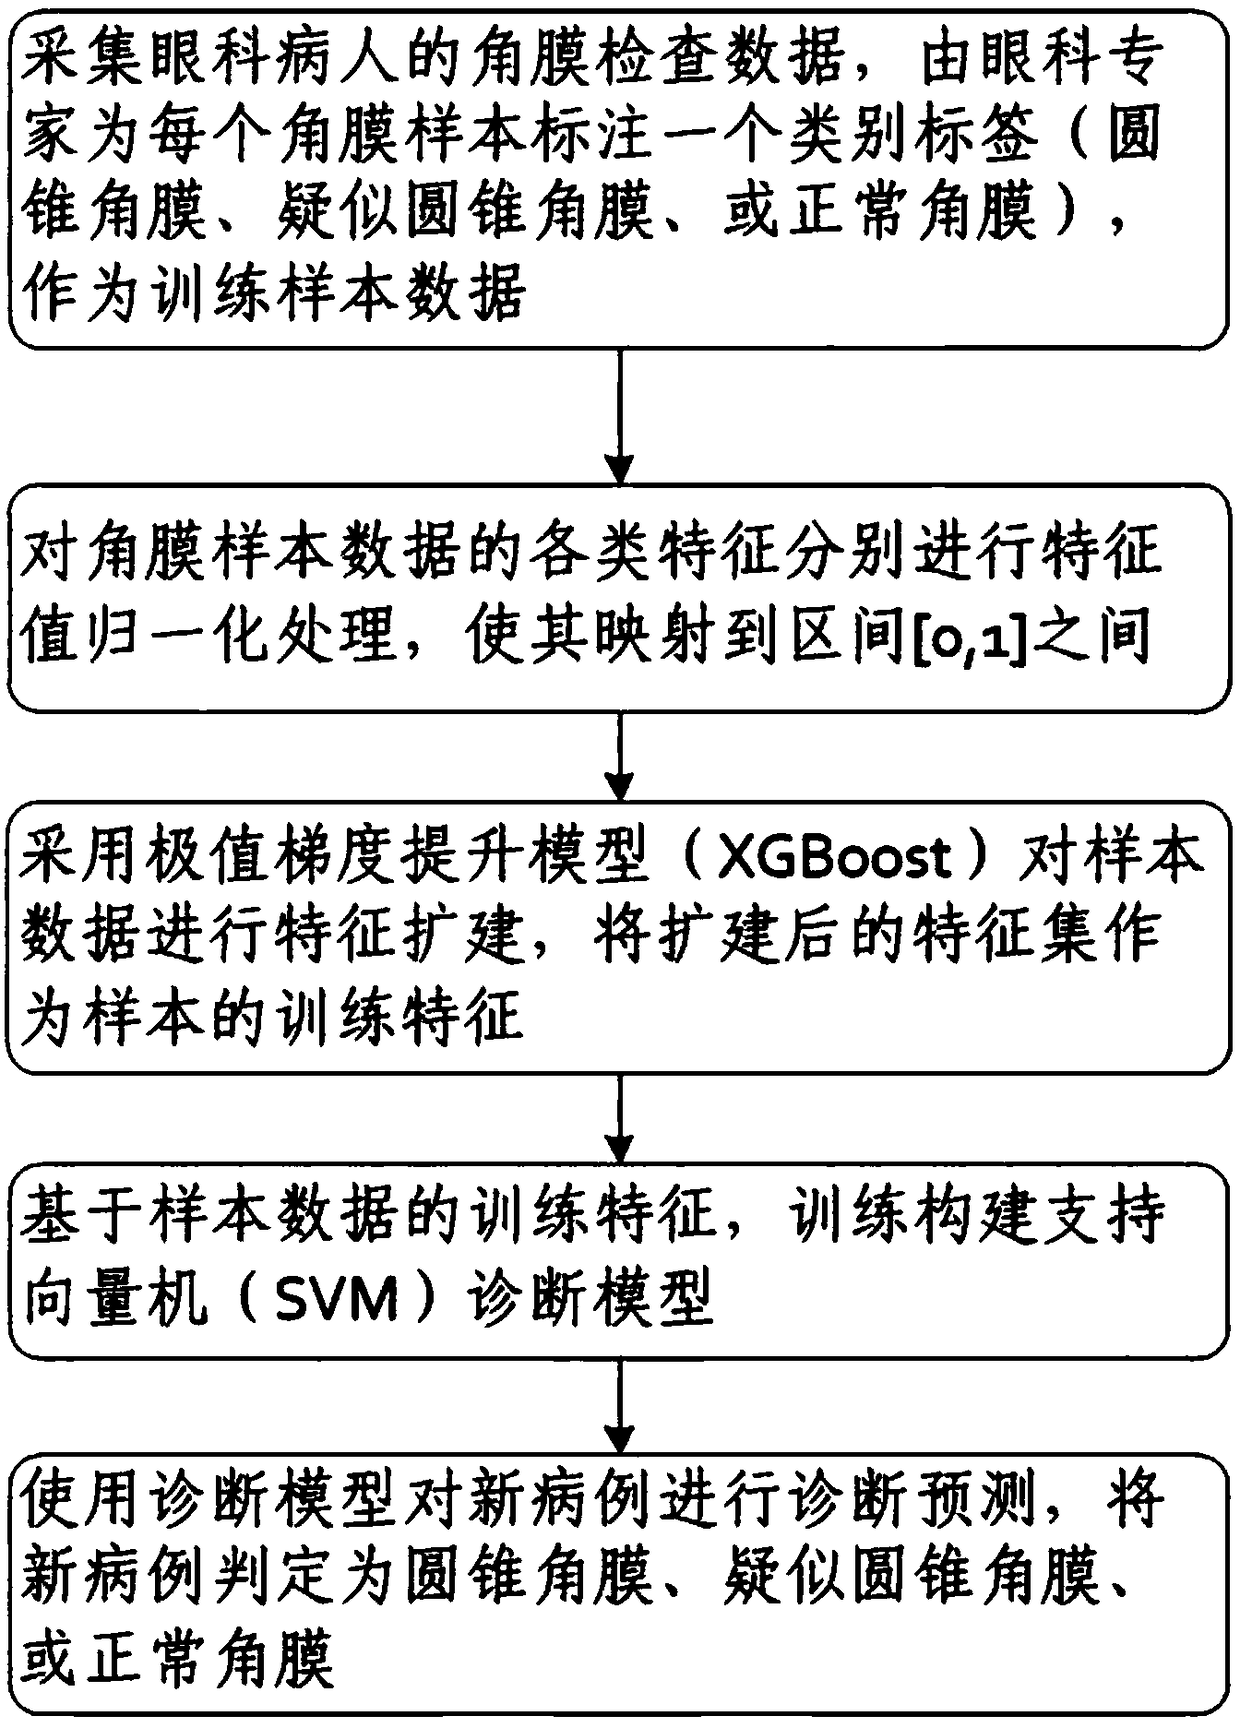 Method for diagnosing keratoconus case based on XGBoost+SVM hybrid machine learning